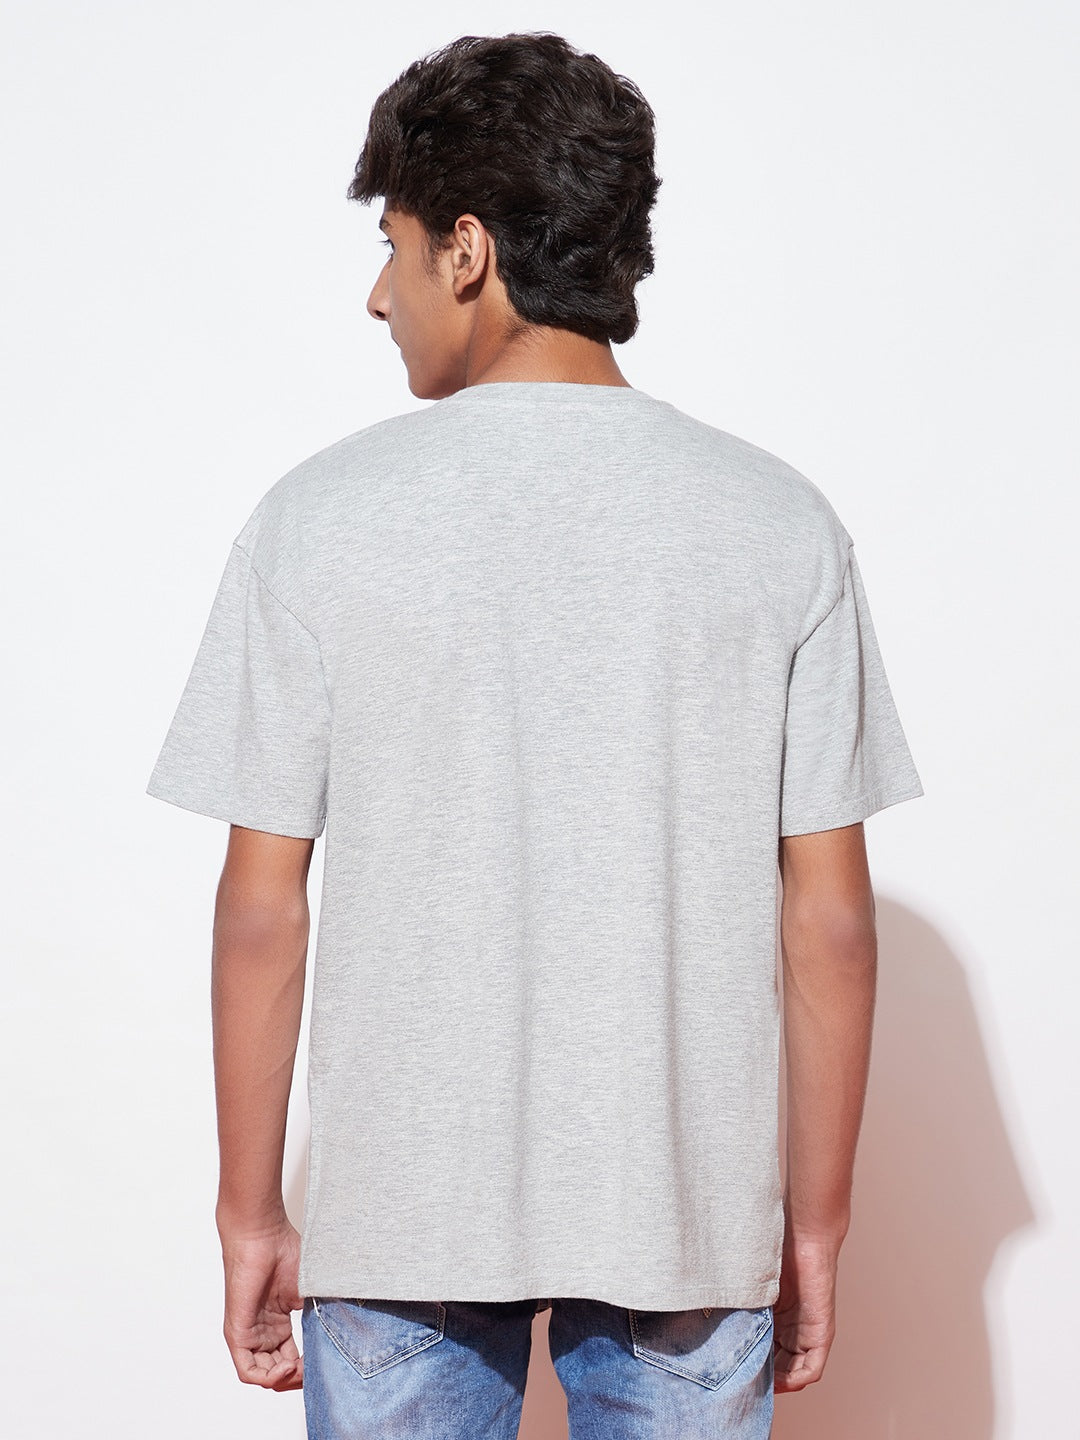 Teen Yale University Print Grey T-shirt